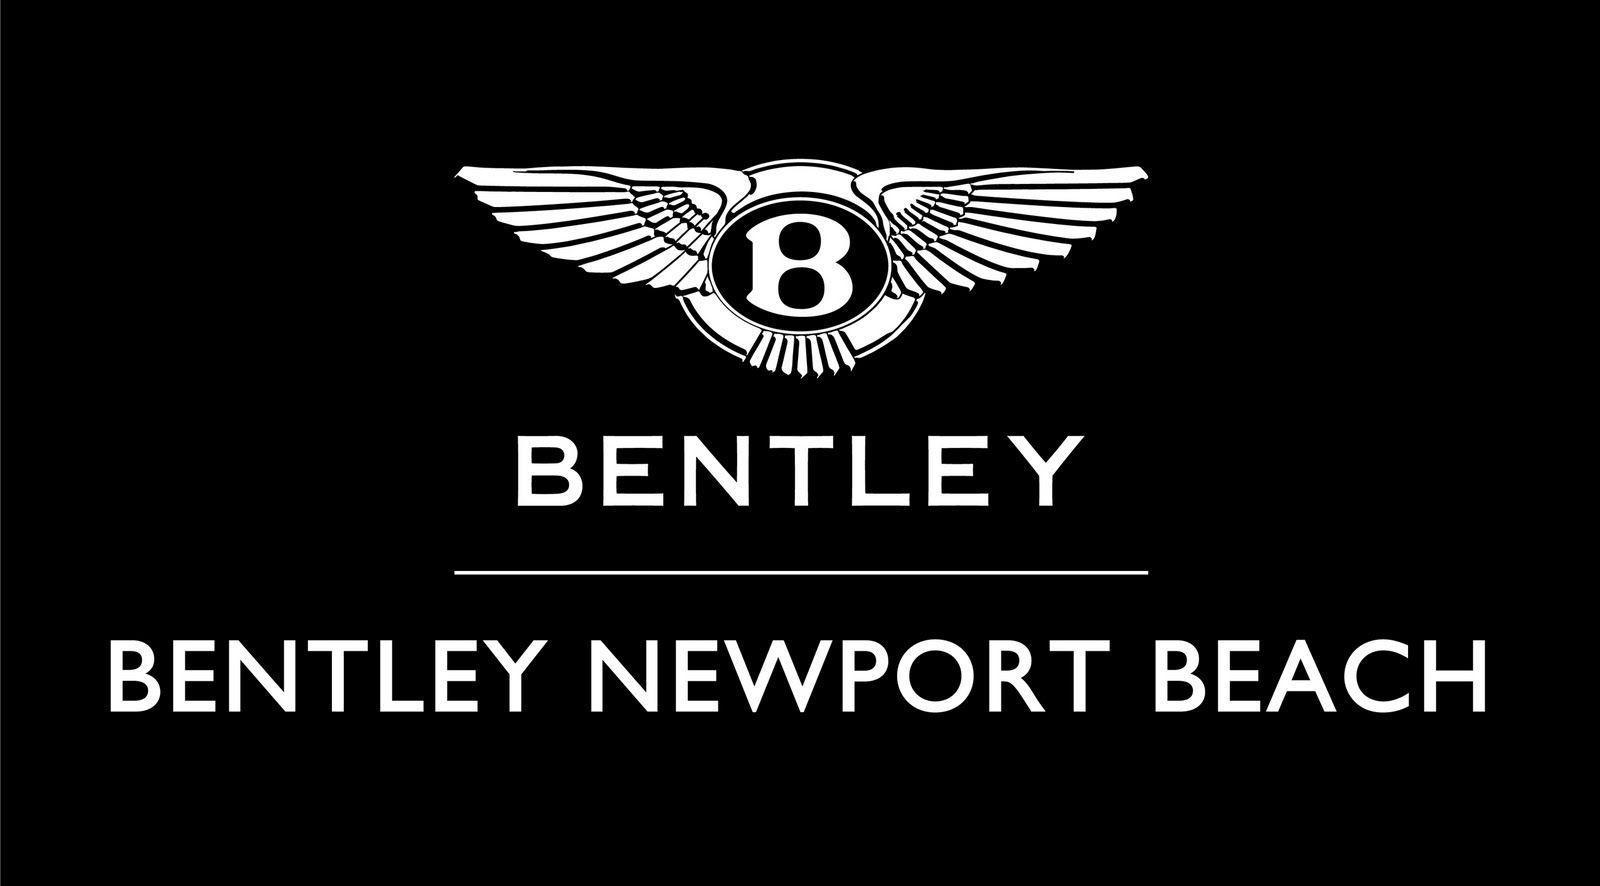 Cars: Marvelous Luxury Car Bentley Car Logos Wallpaper